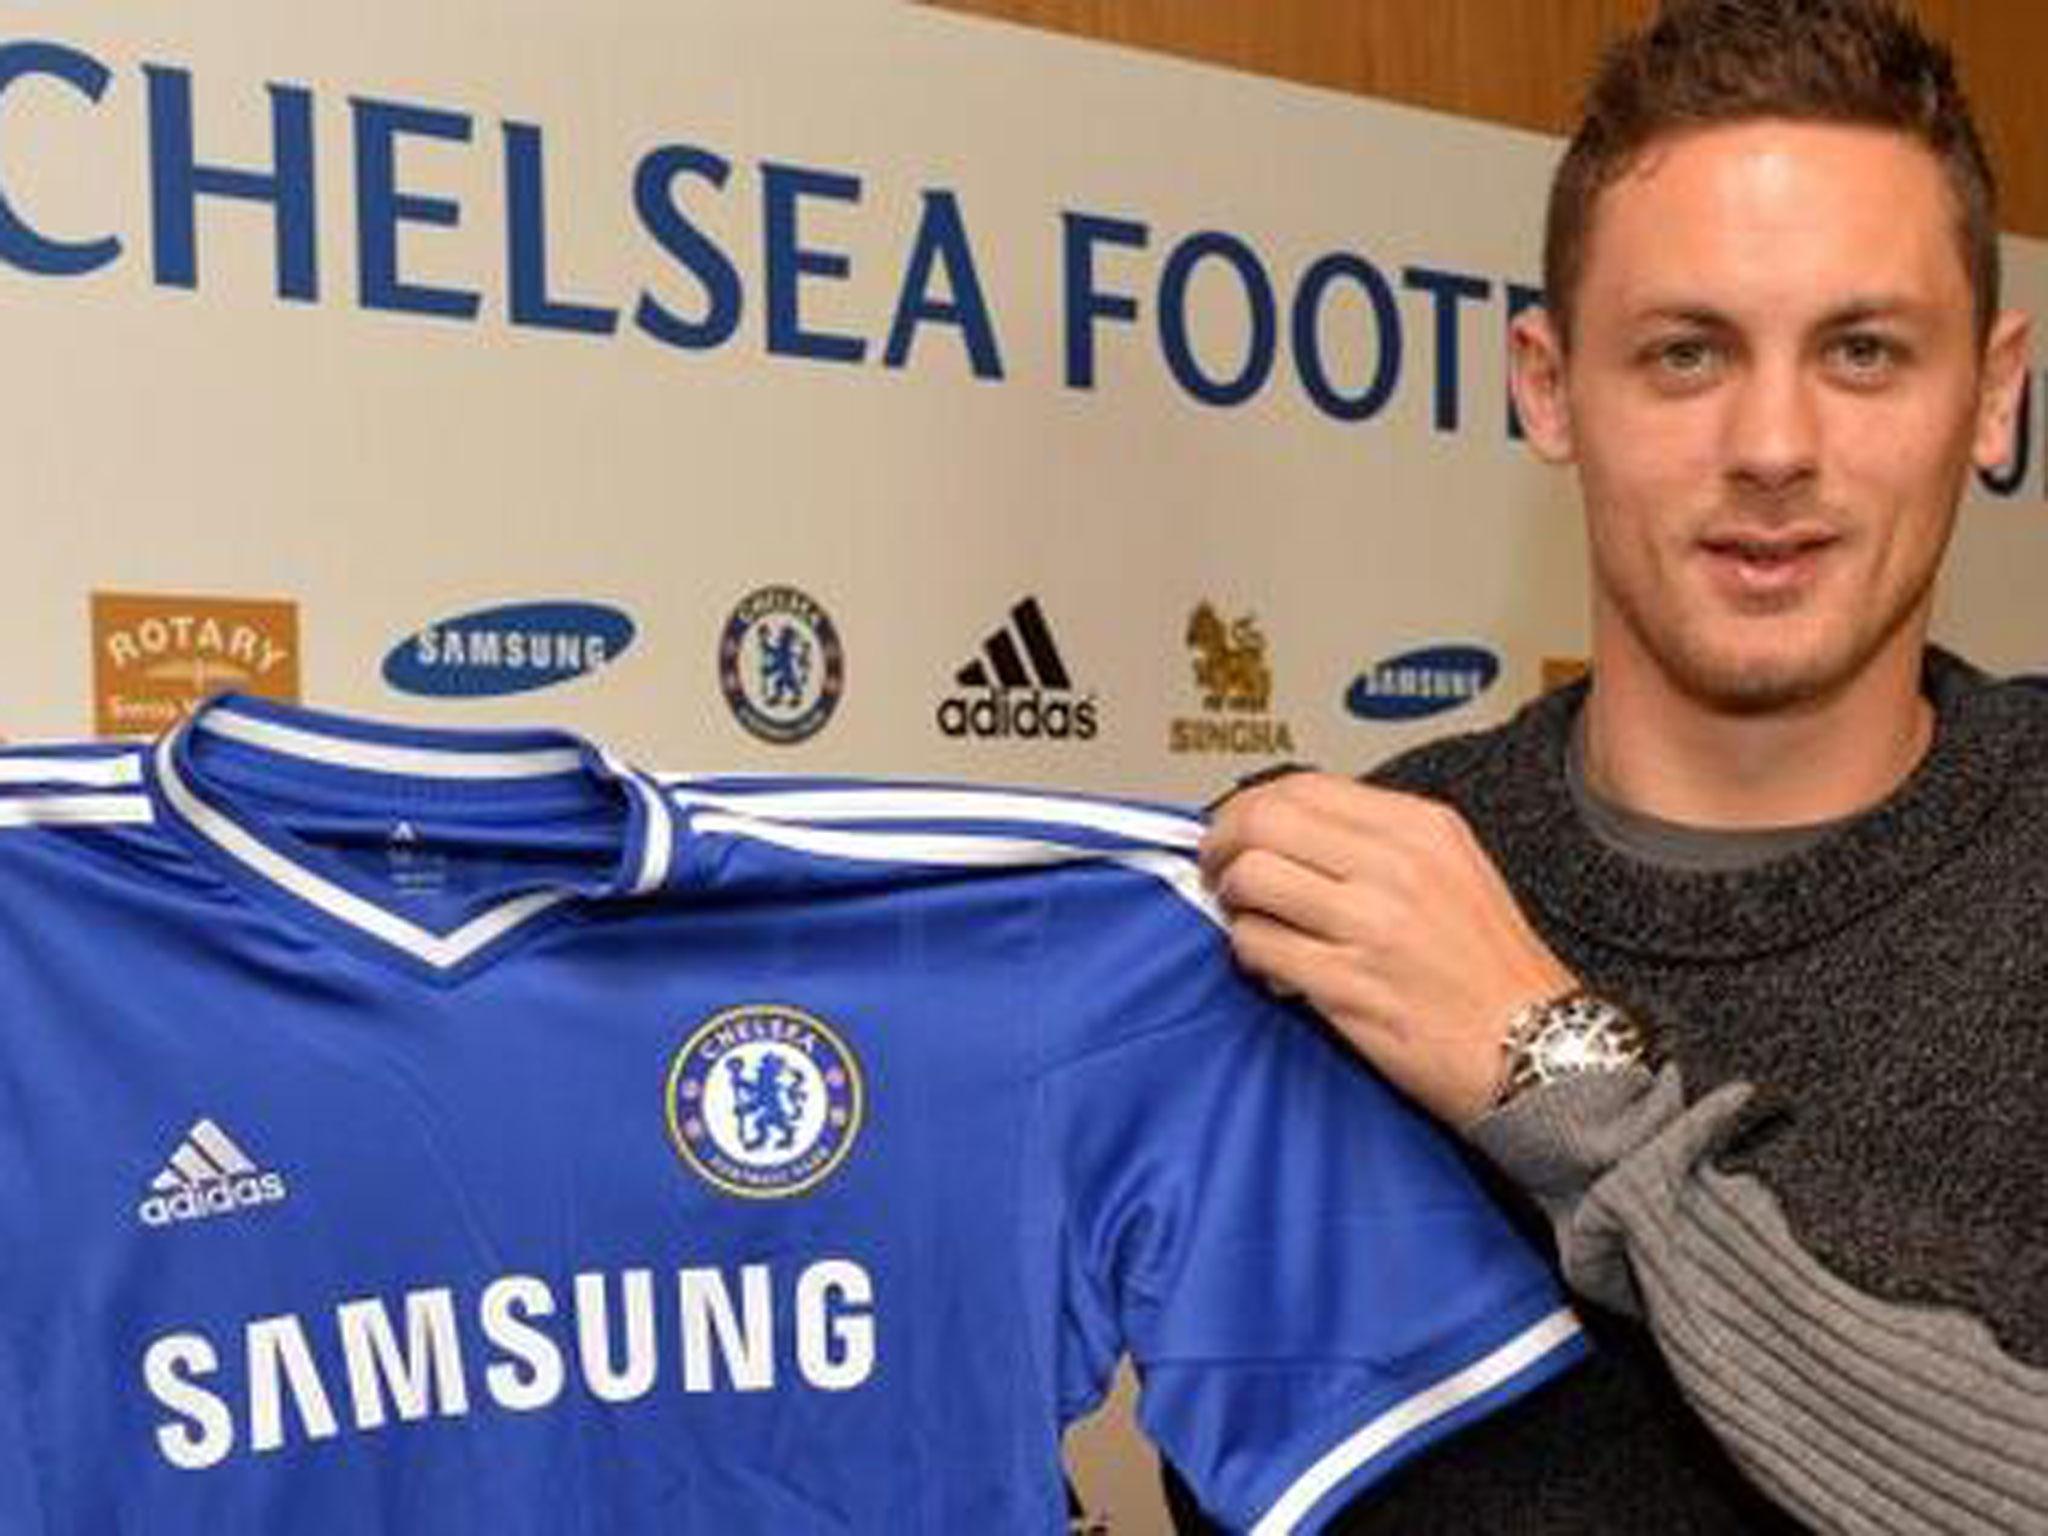 Chelsea present new signing Nemanja Matic